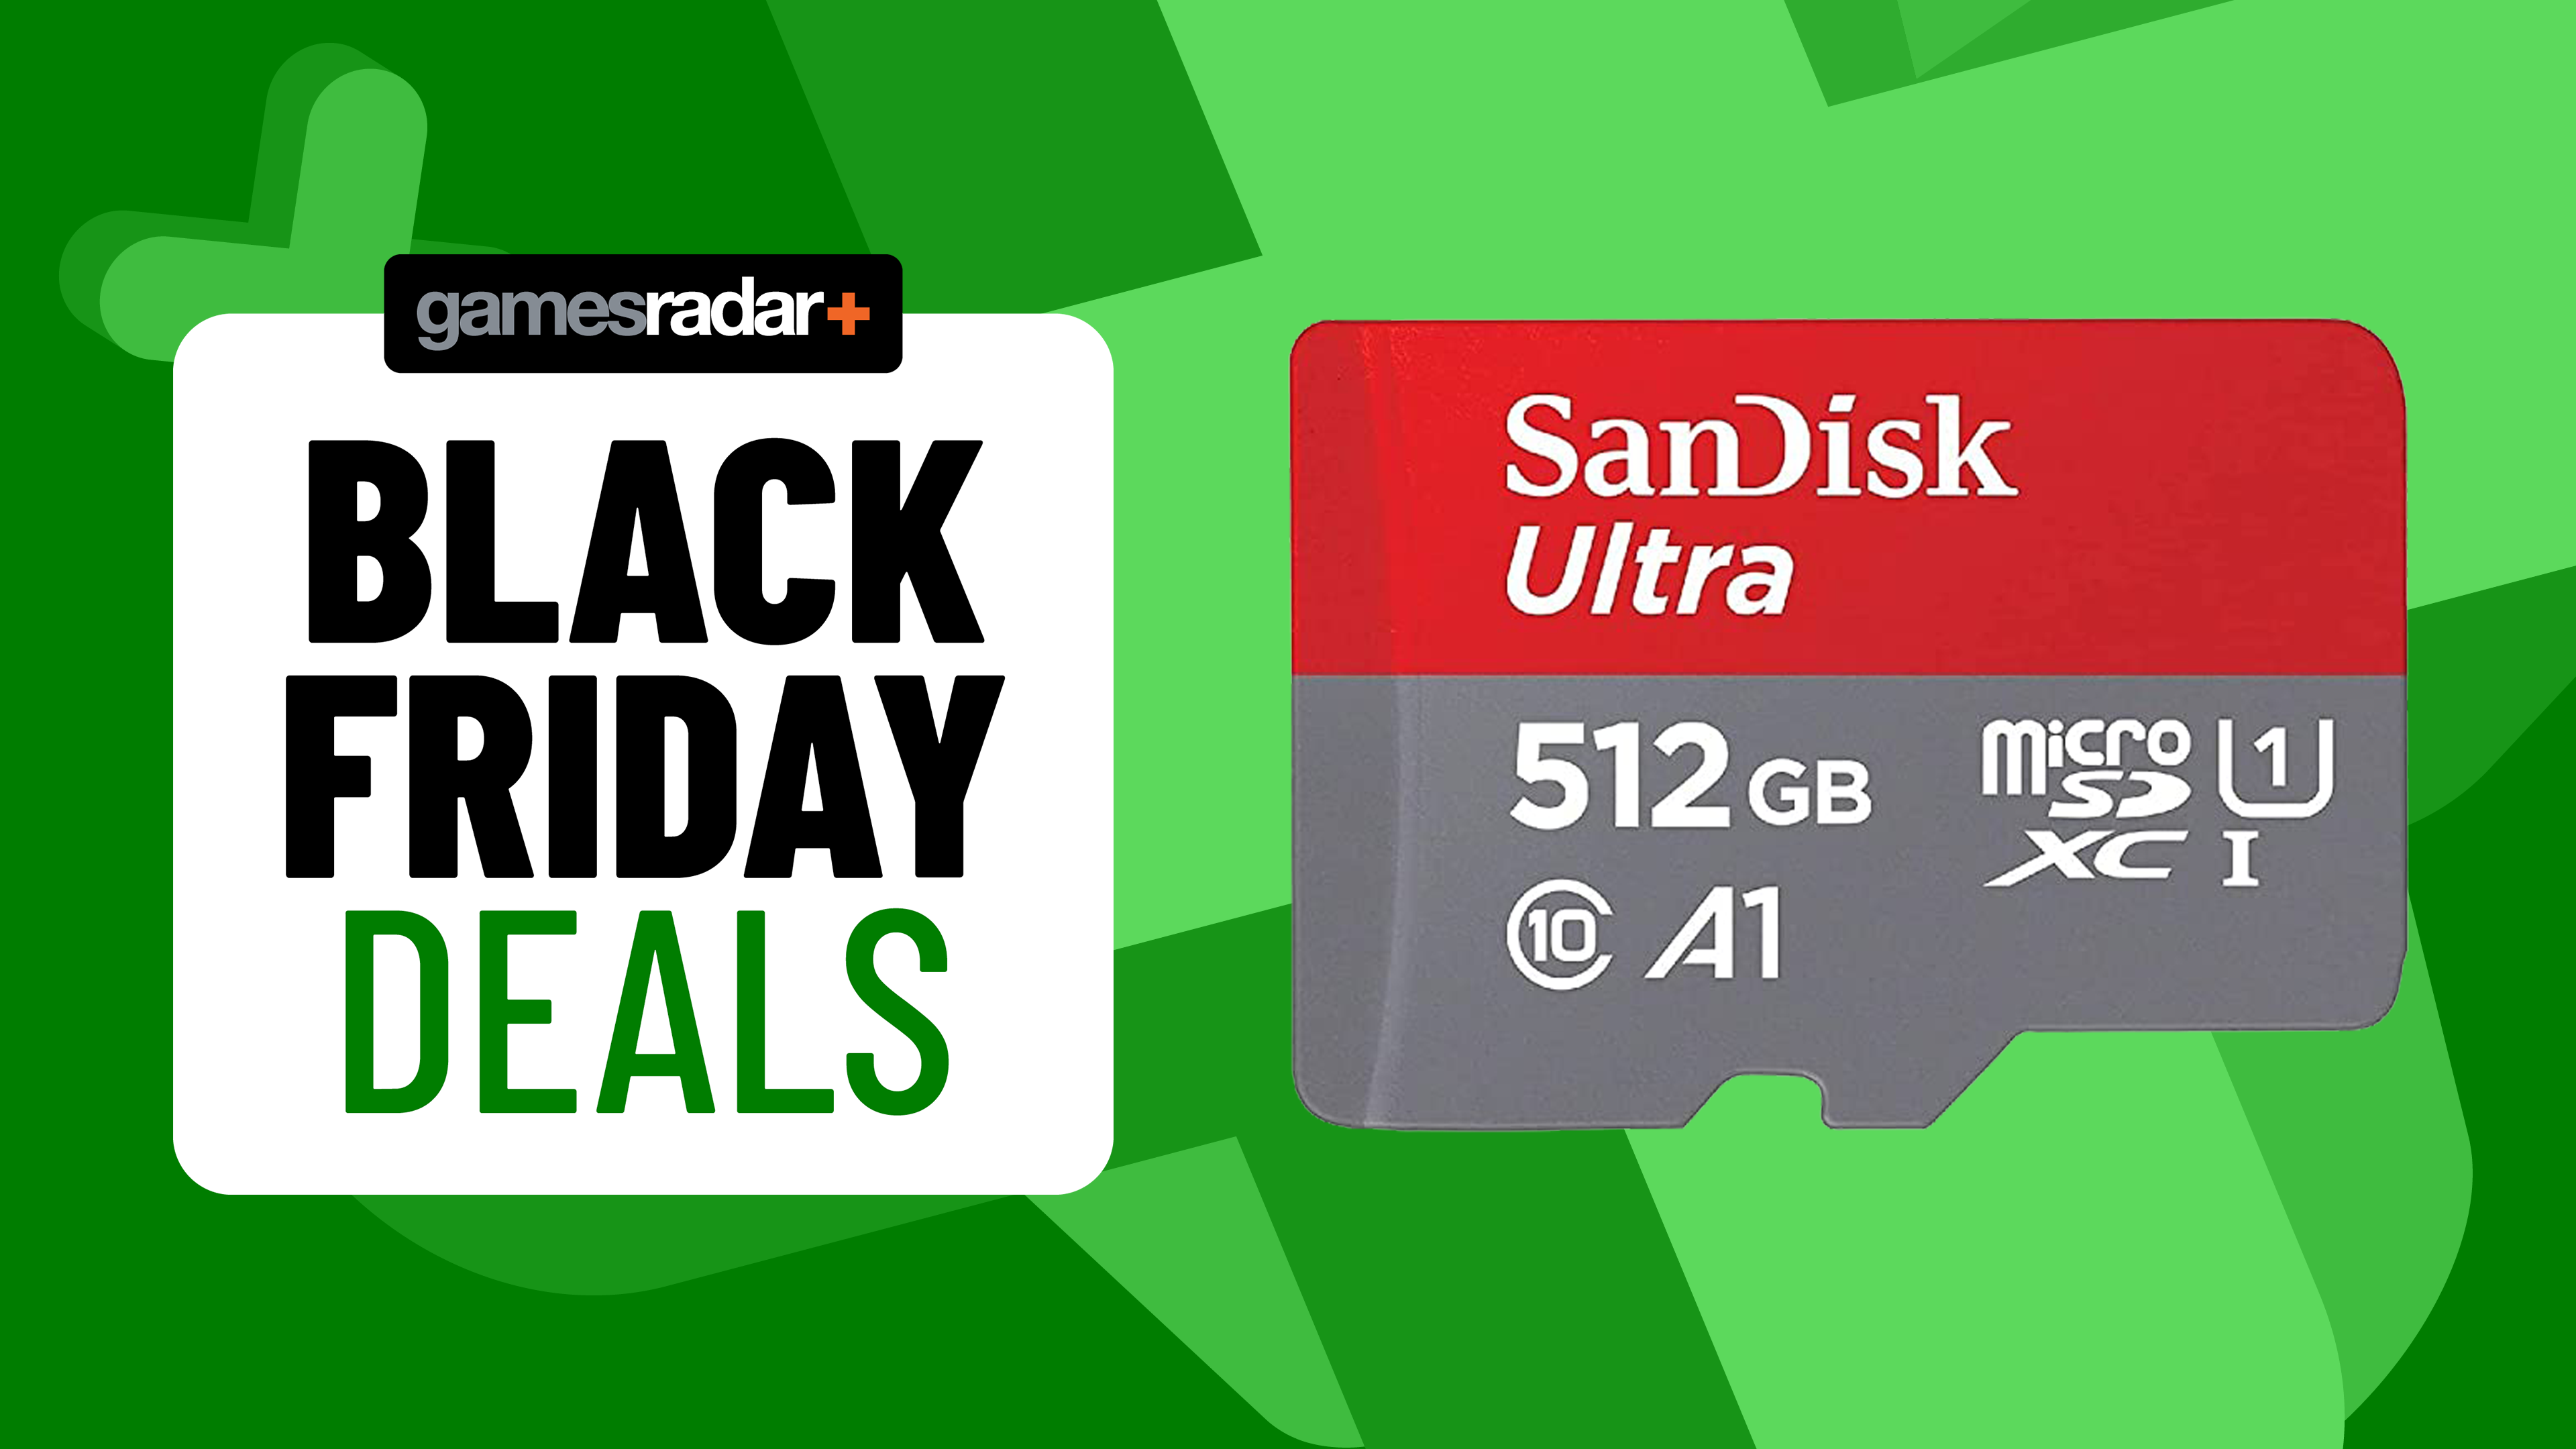 SanDisk 512GB memory card Black Friday deal